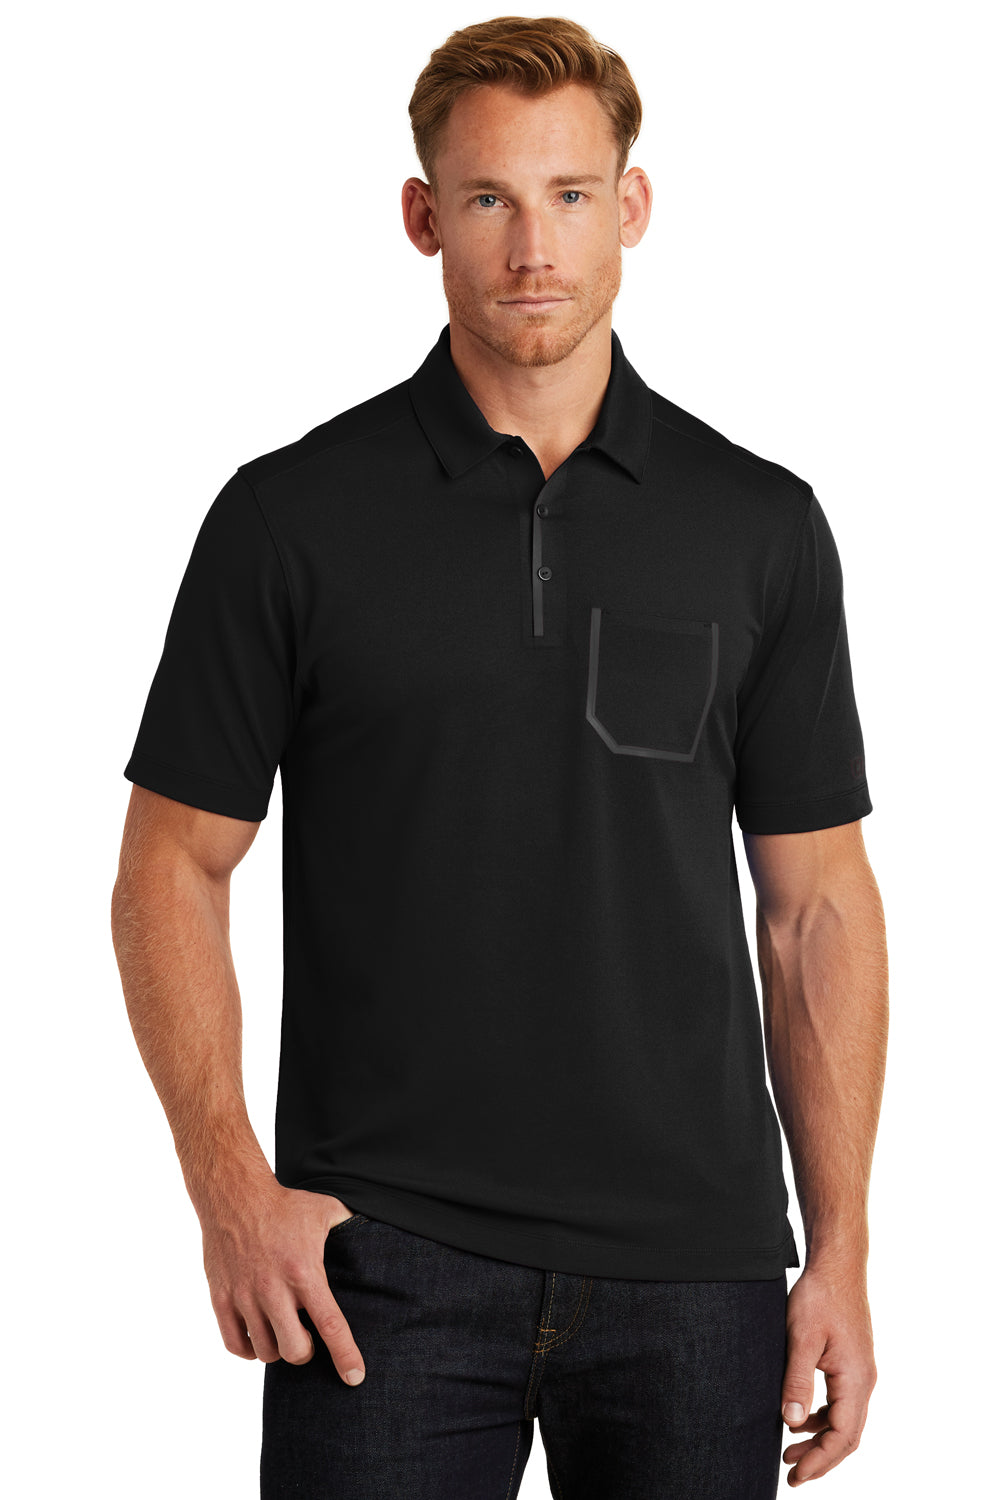 Ogio OG131 Mens Fuse Moisture Wicking Short Sleeve Polo Shirt w/ Pocket Black Front